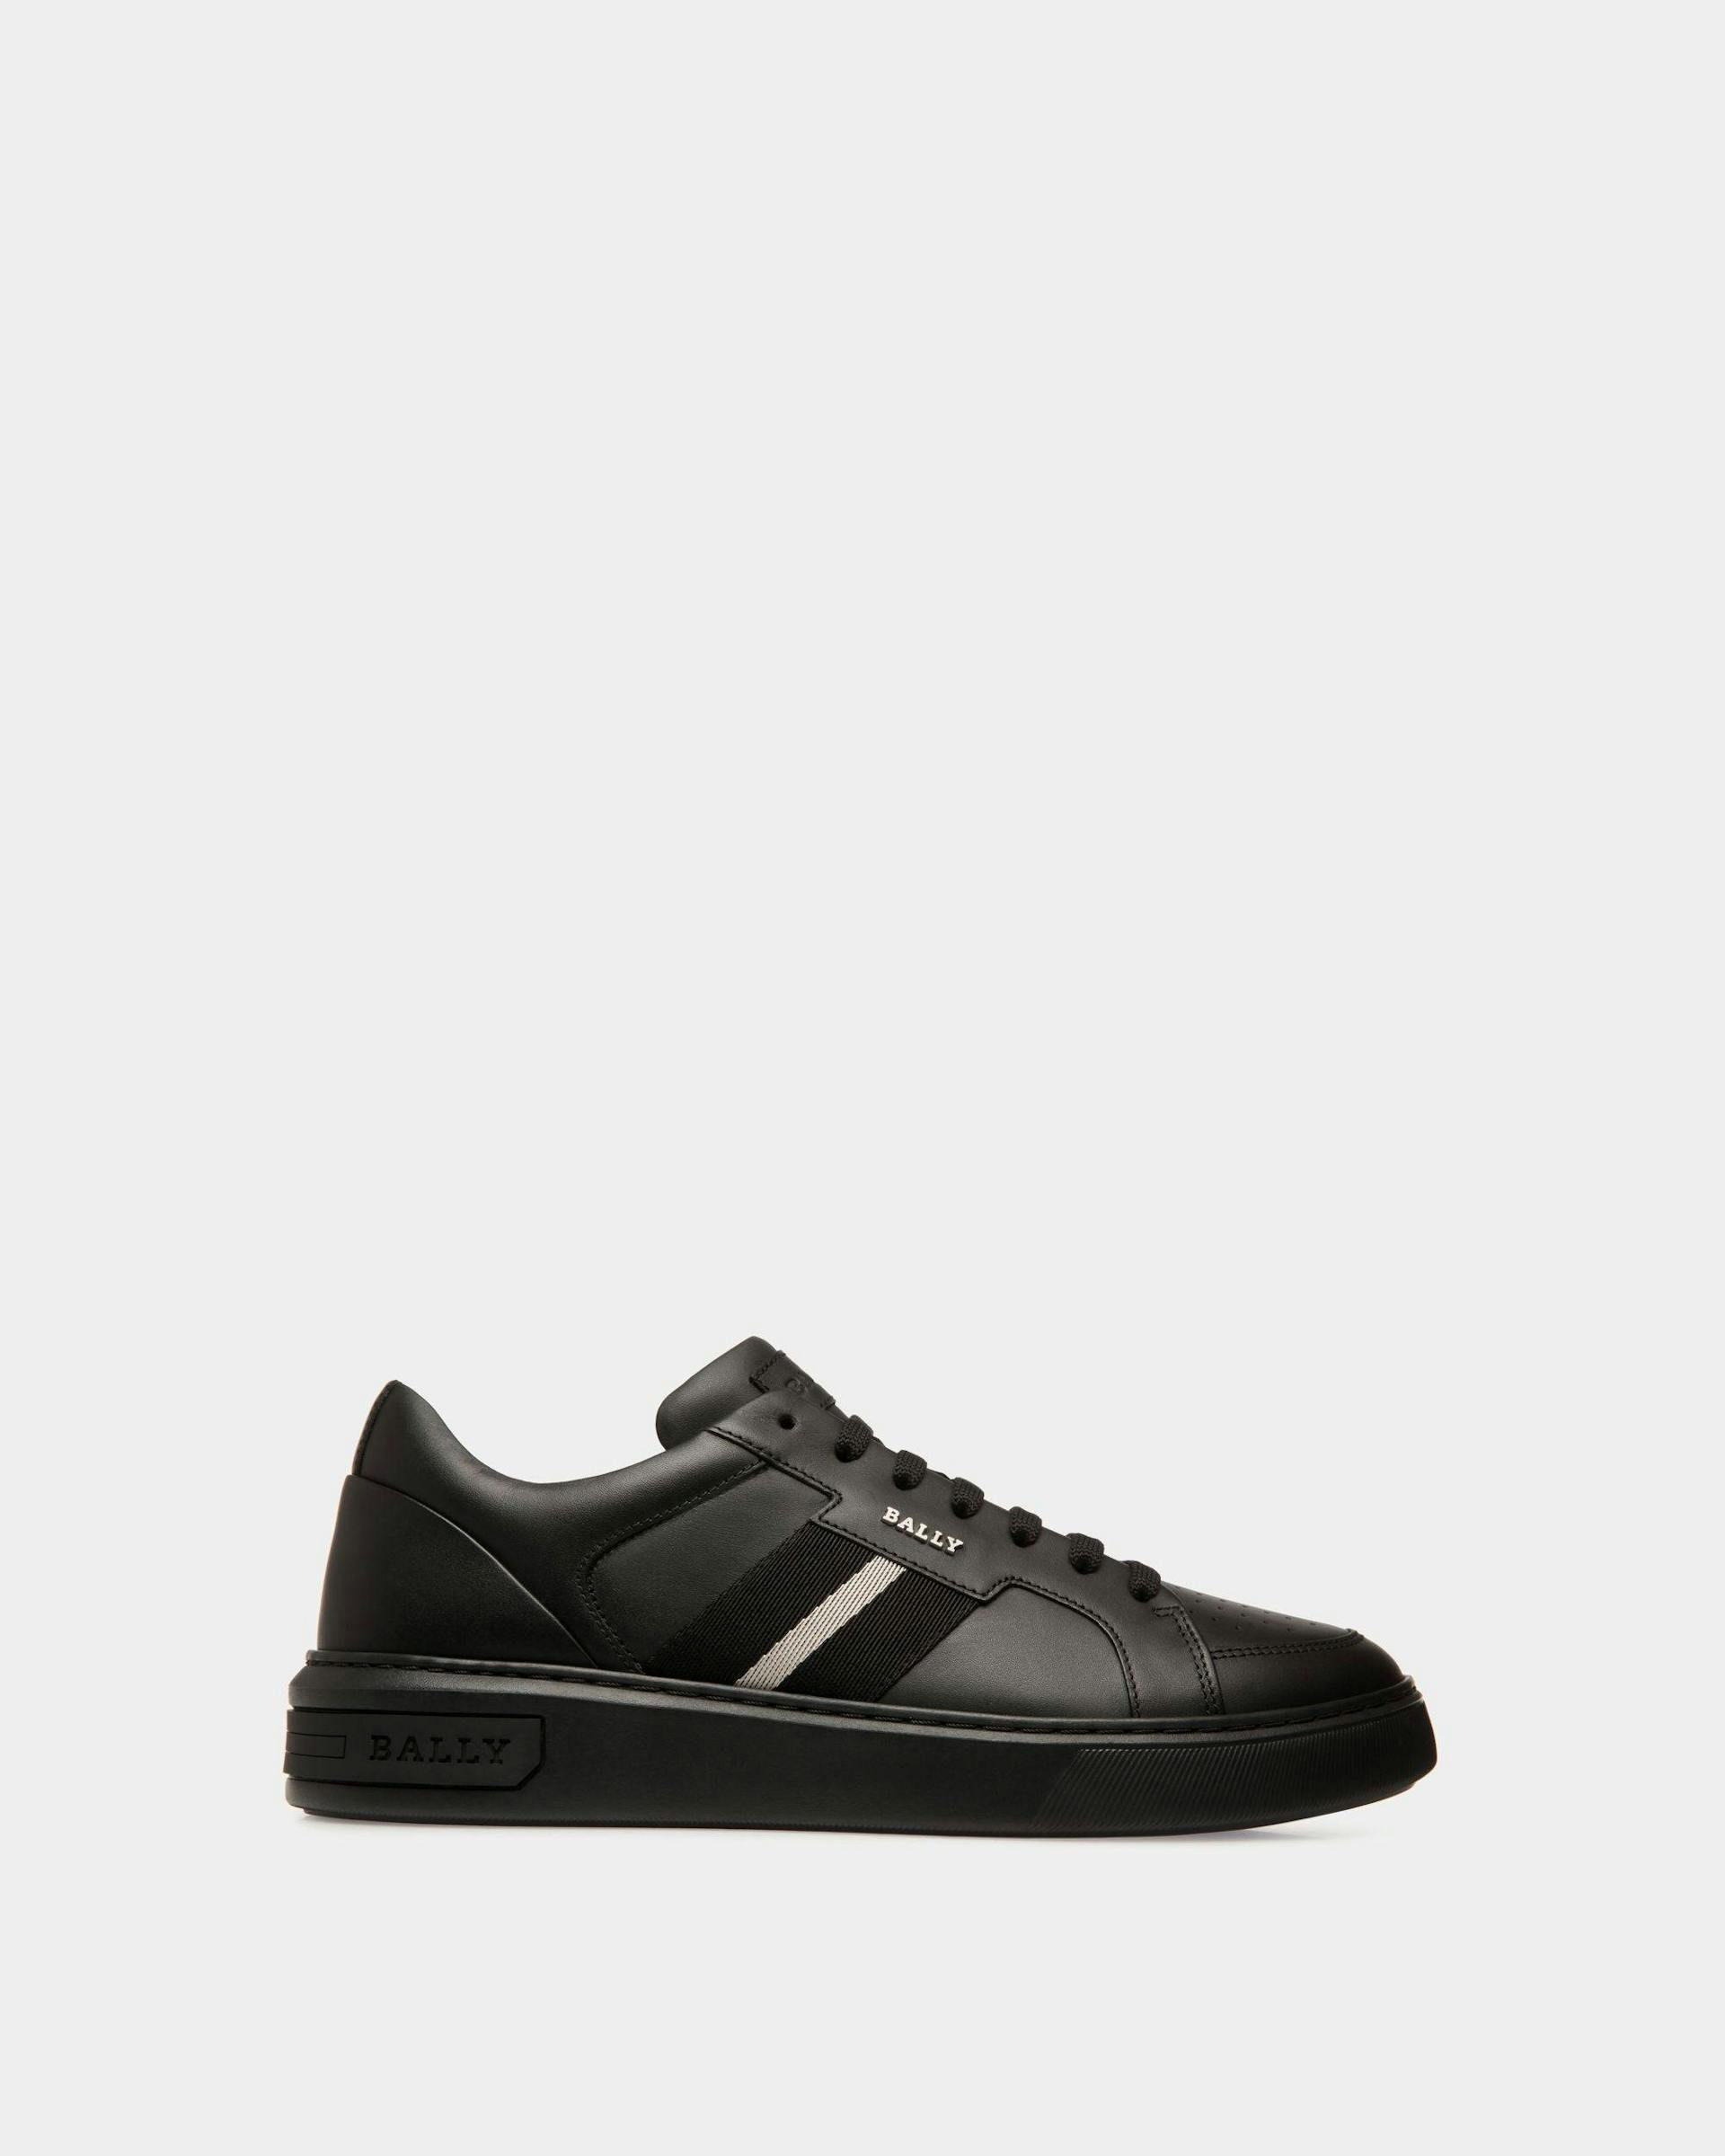 Moony Leather Sneakers In Black - Men's - Bally - 01